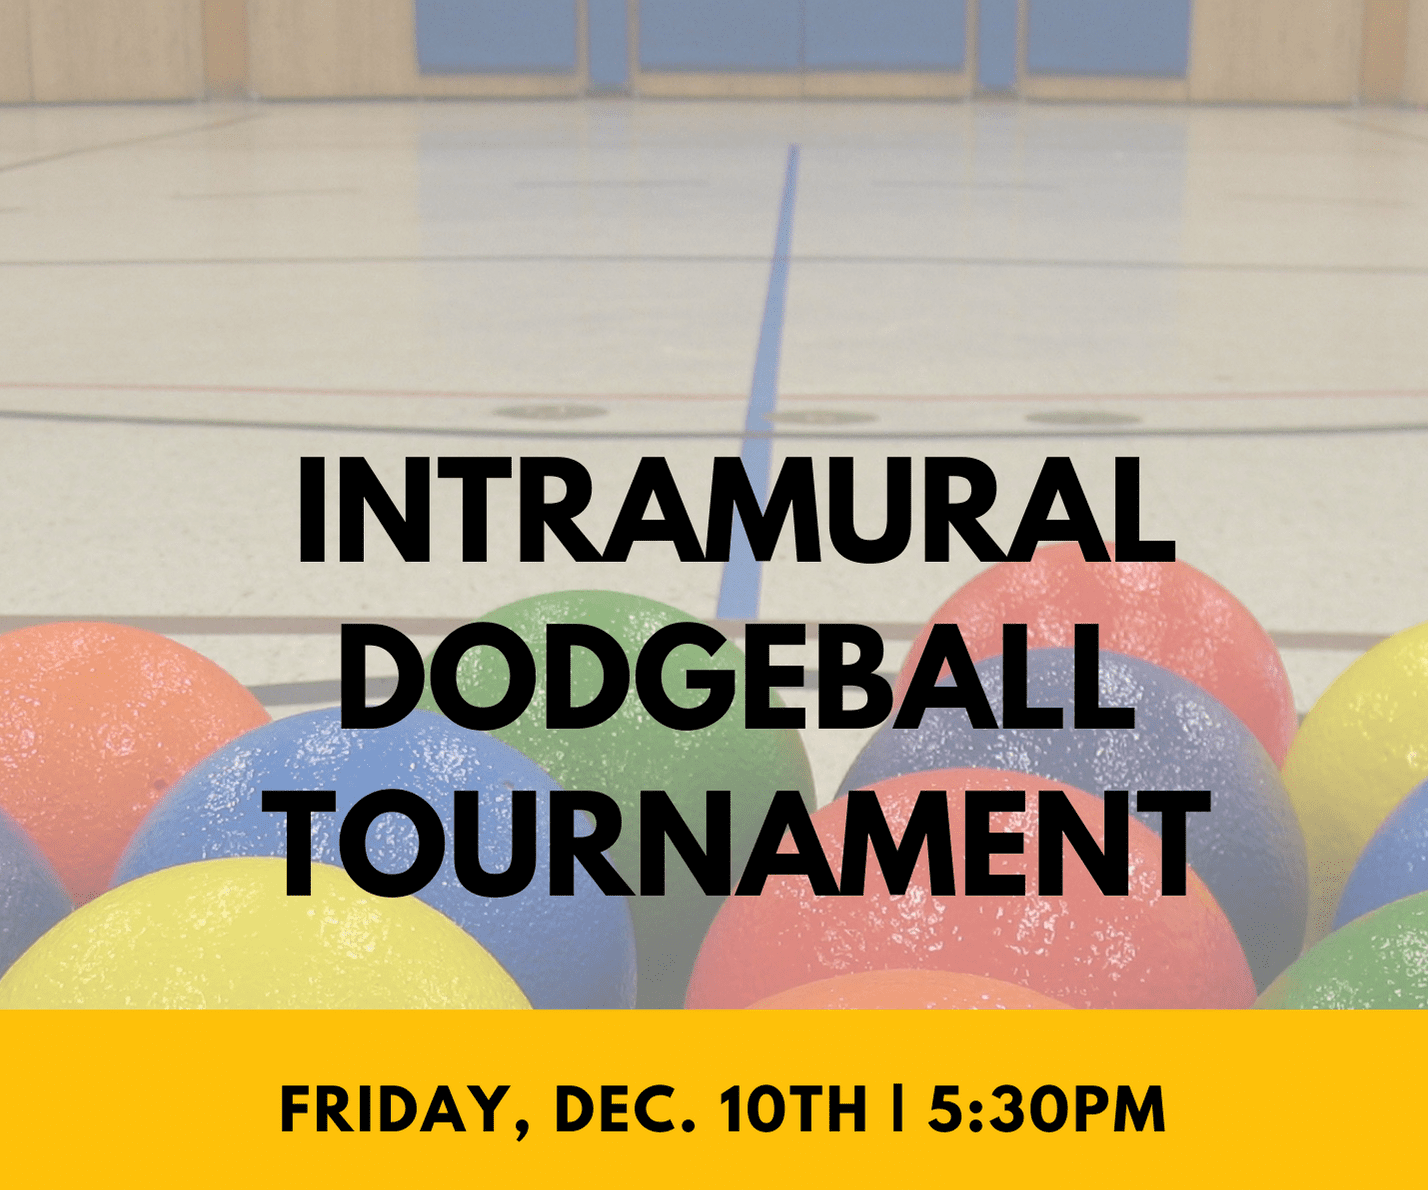 Intramural Dodgeball Tournament Dec 10 at 5:30 pm